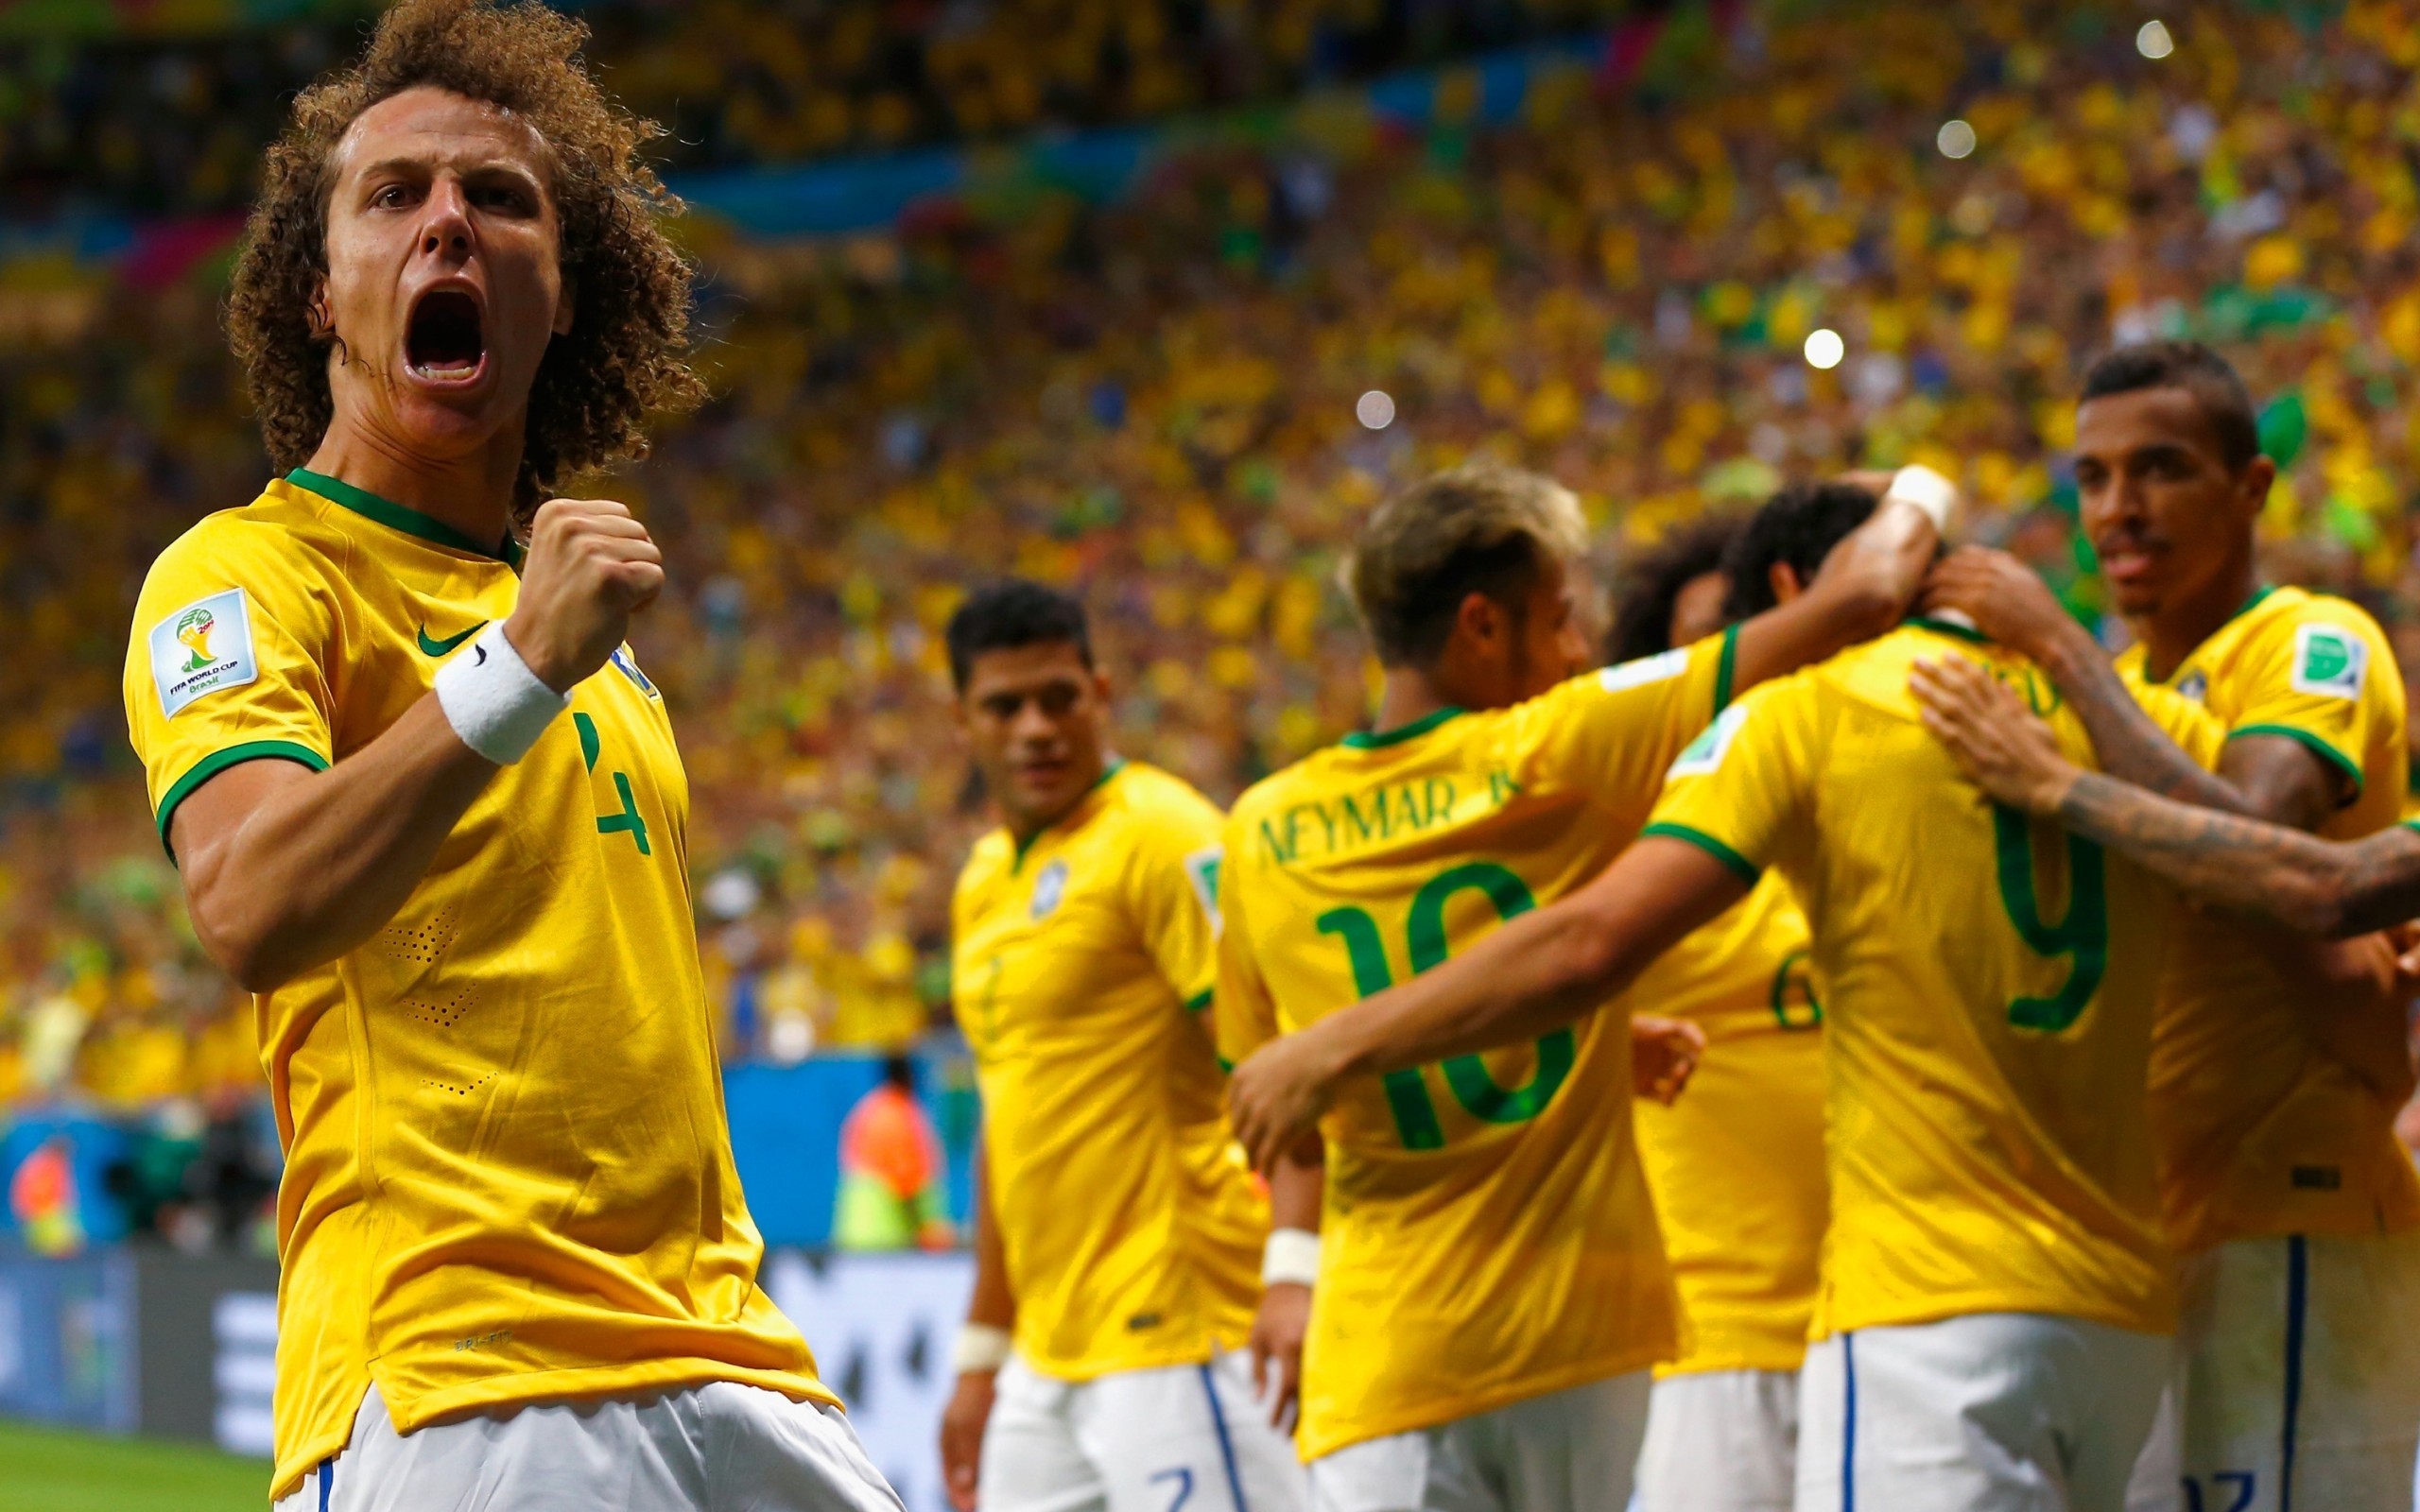 Fifa brazil. Бразилия 2014 группа «b». Бразилия Германия 2014. Вагнер Карвальо.